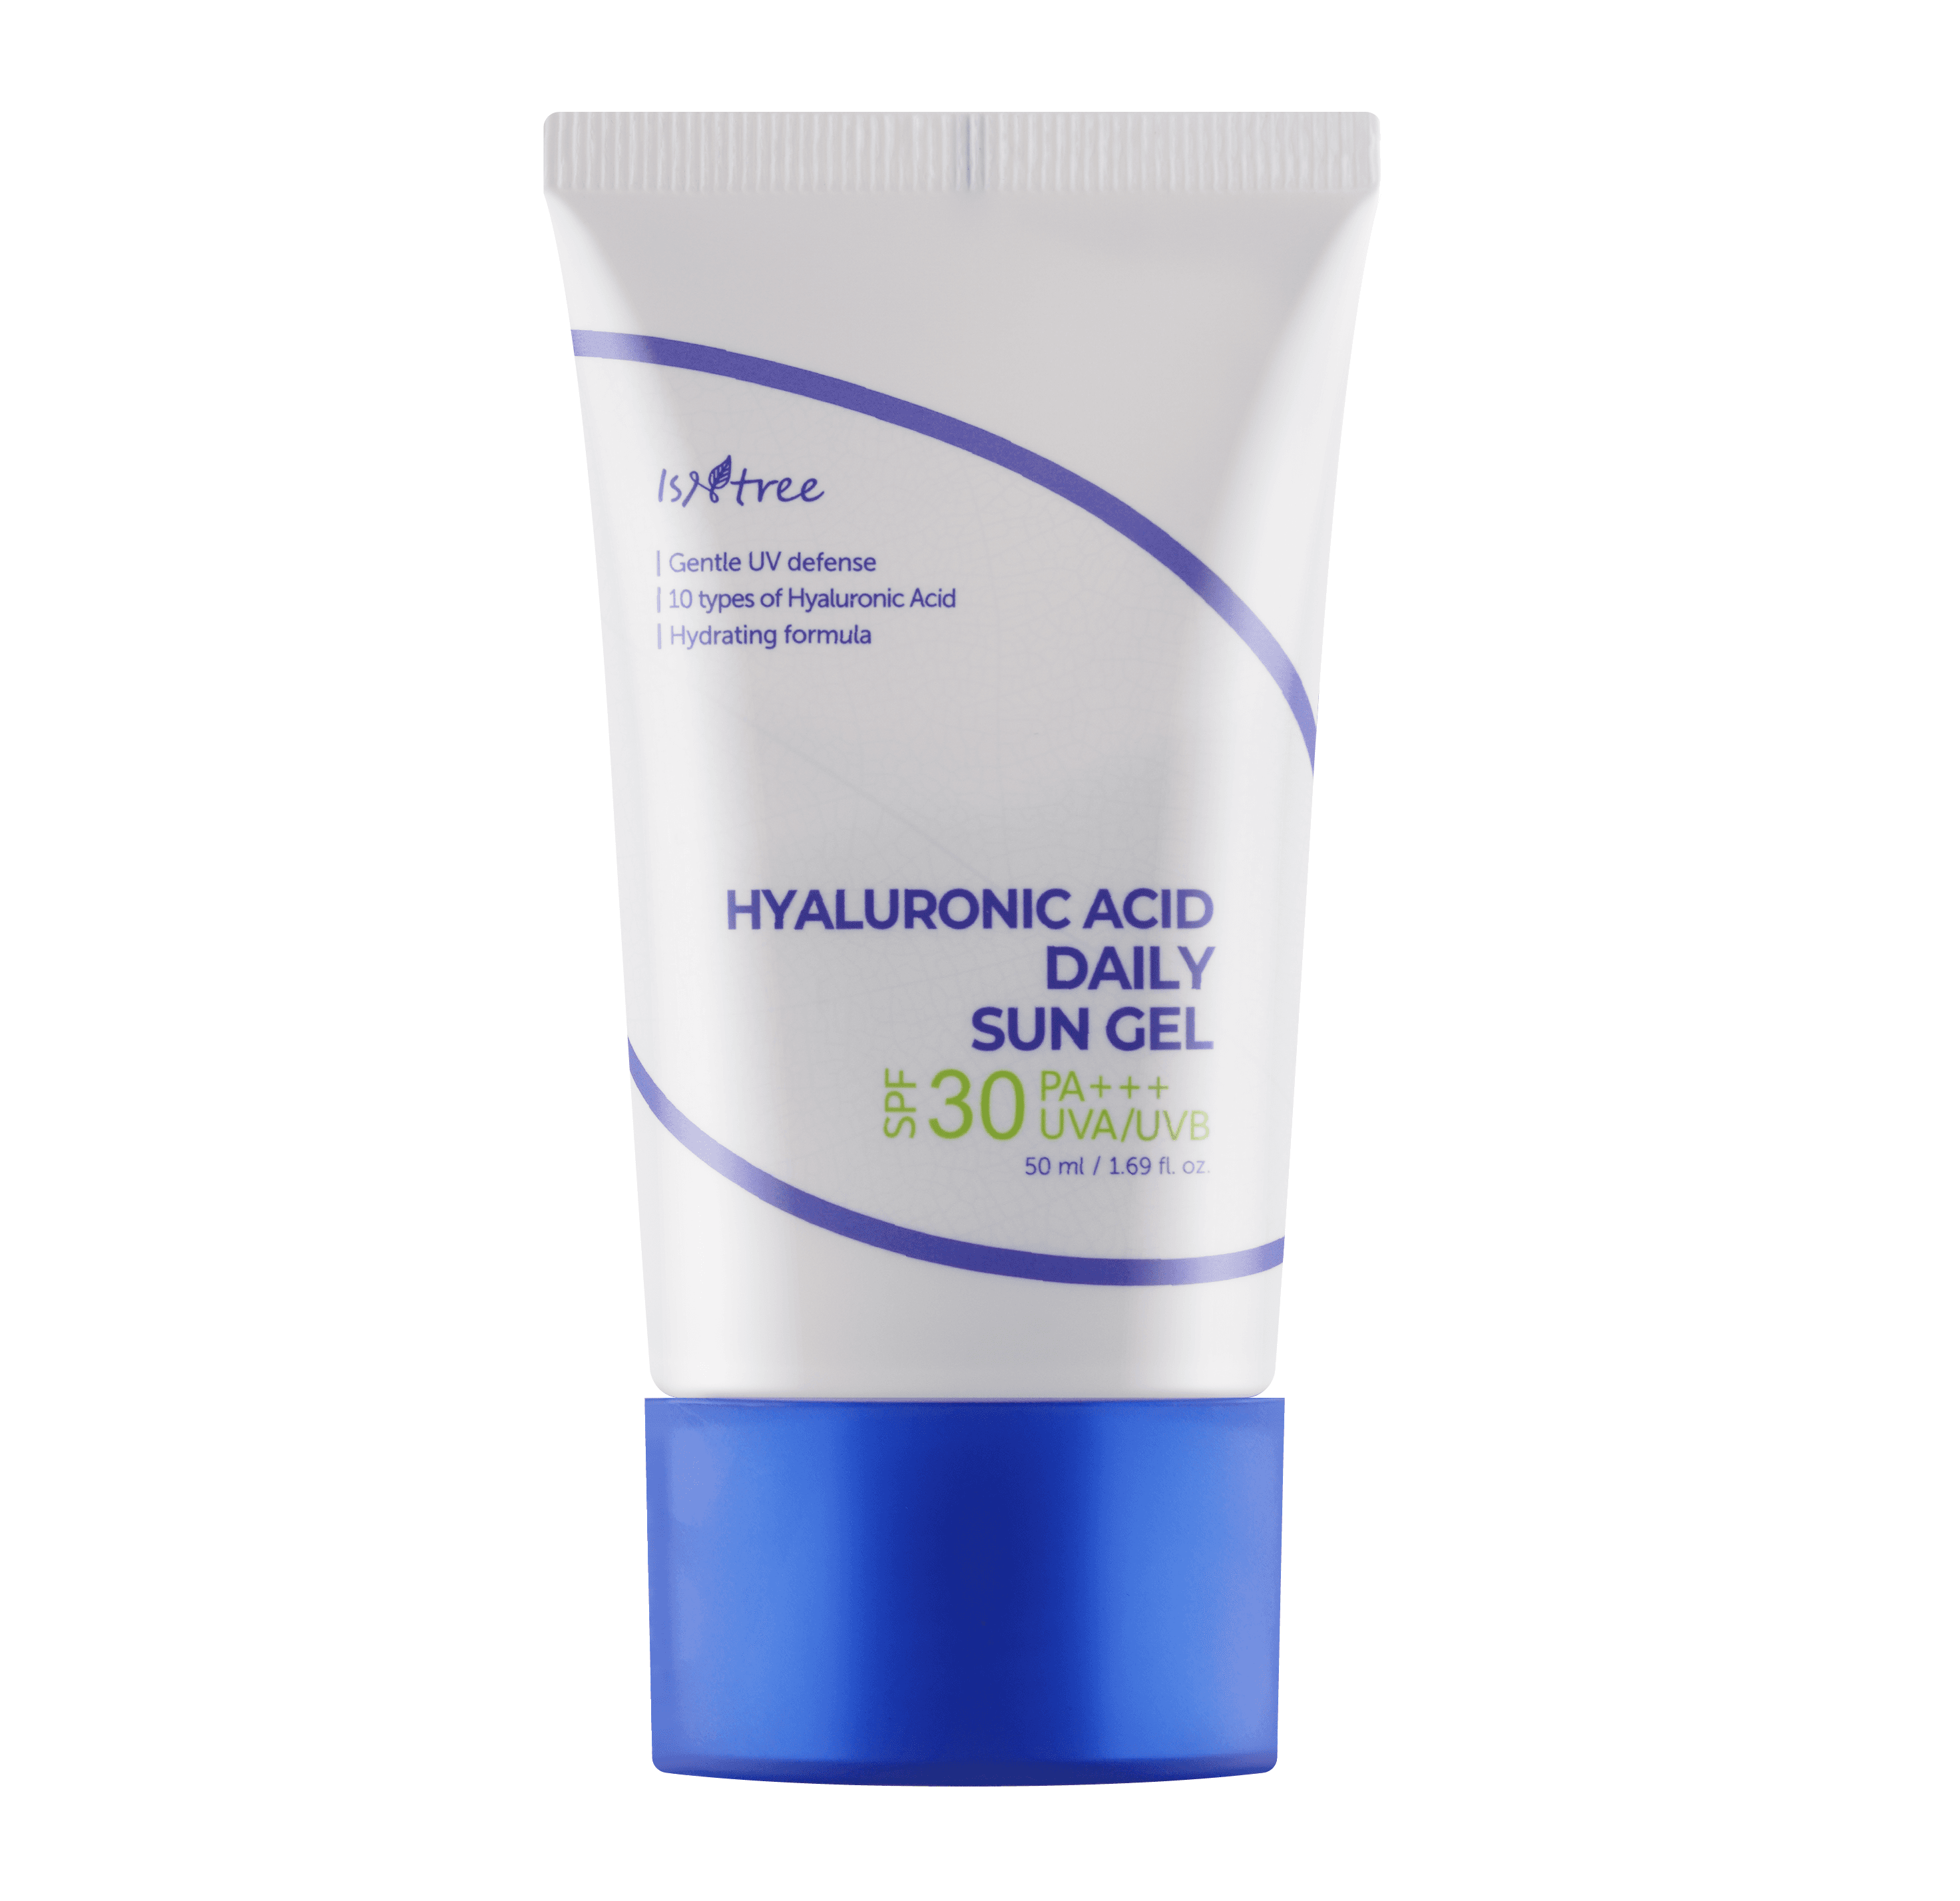 Hyaluronic Acid Daily Sun Gel SPF30 PA+++